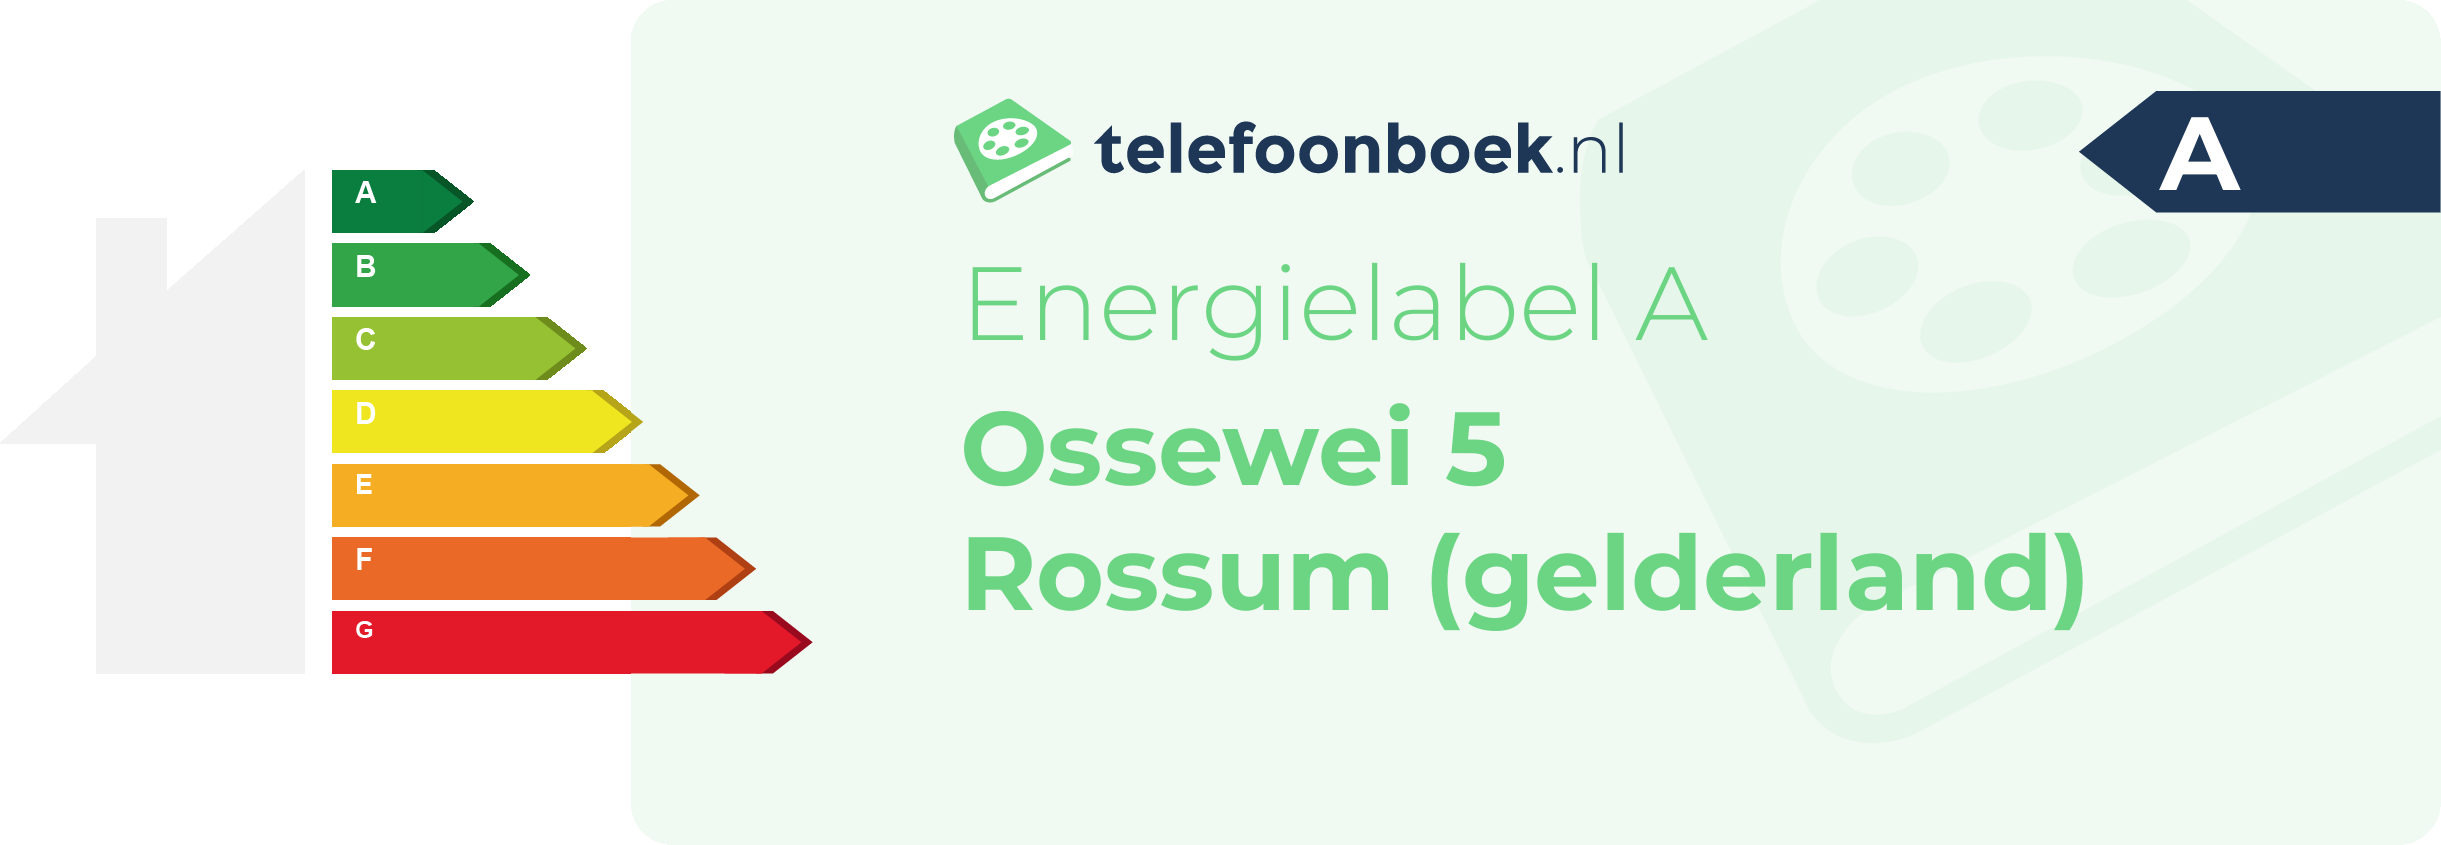 Energielabel Ossewei 5 Rossum (Gelderland)